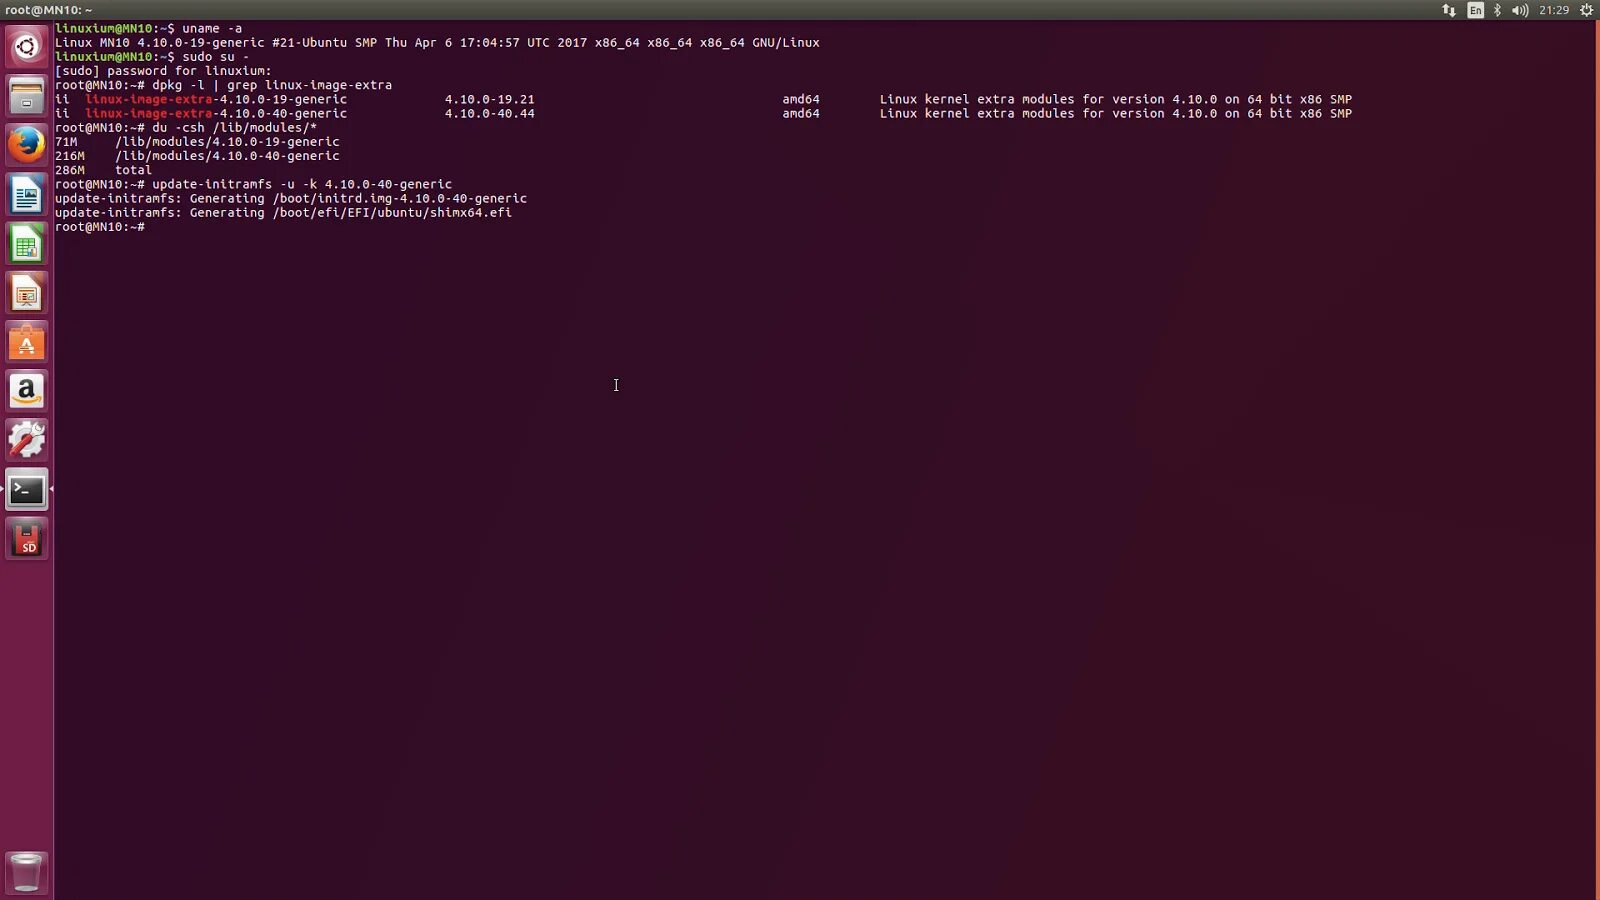 EFI Ubuntu. Generic Linux. Uname -a Ubuntu. Ubuntu Apollo Lake. Uname linux